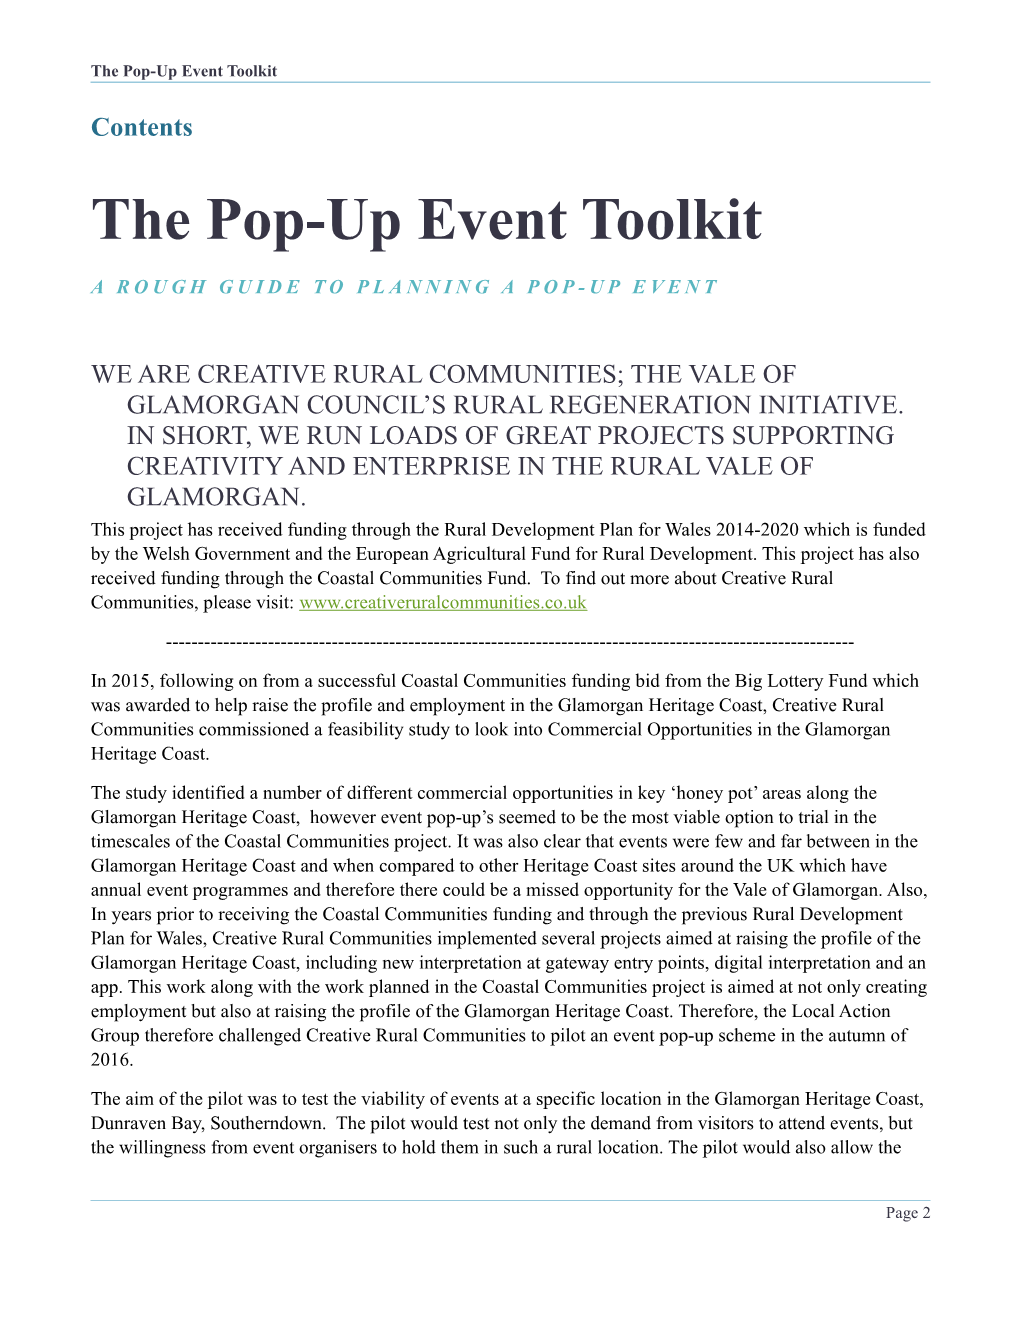 Pop up Event Toolkit English Web Version